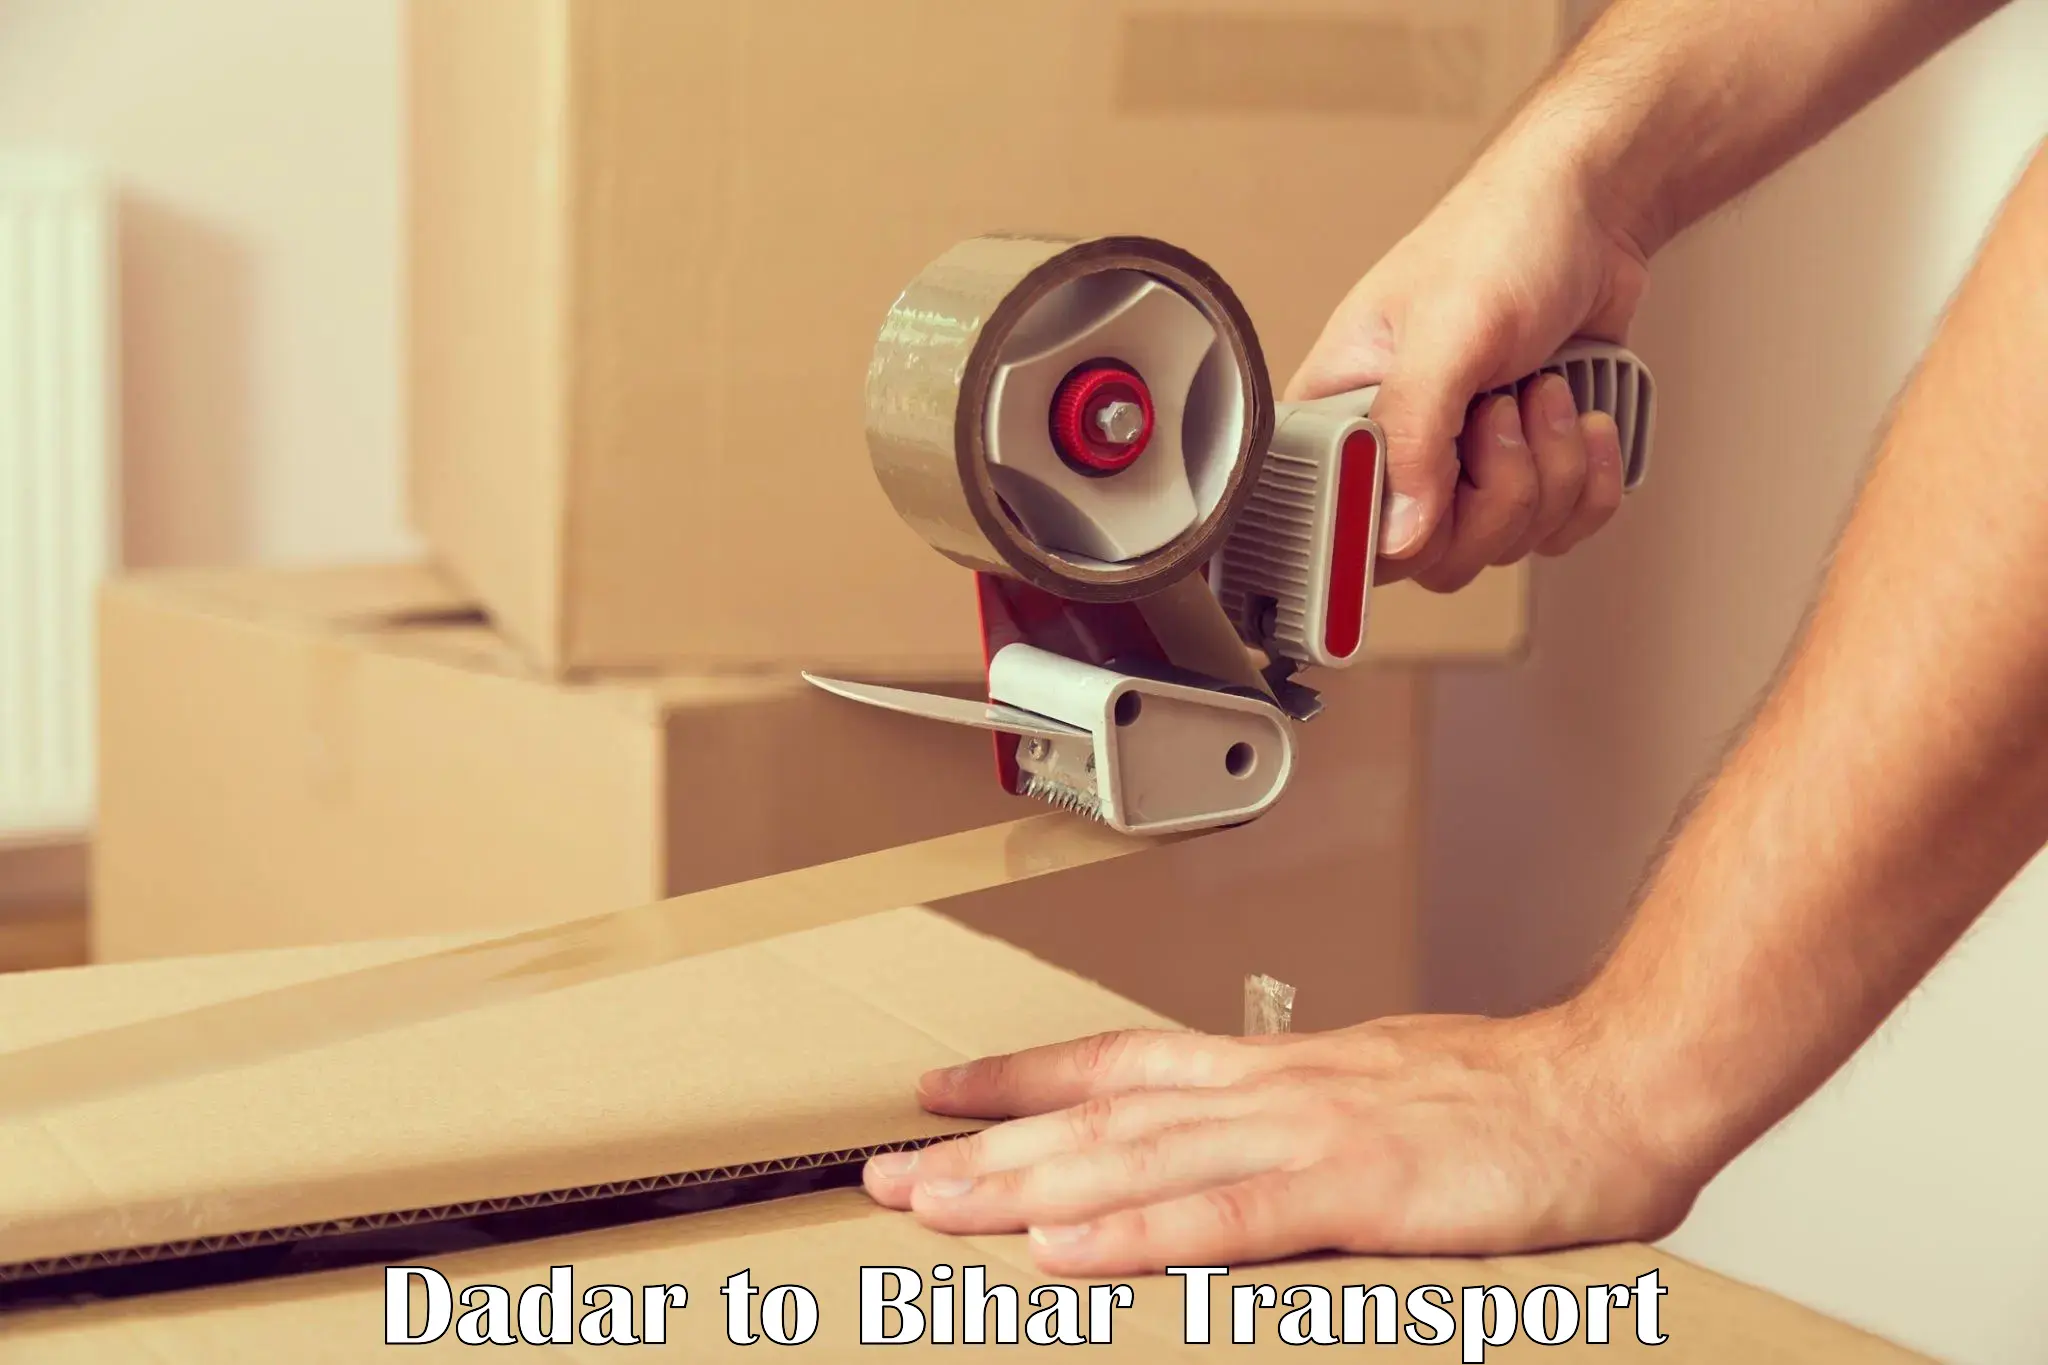 Delivery service Dadar to Banka